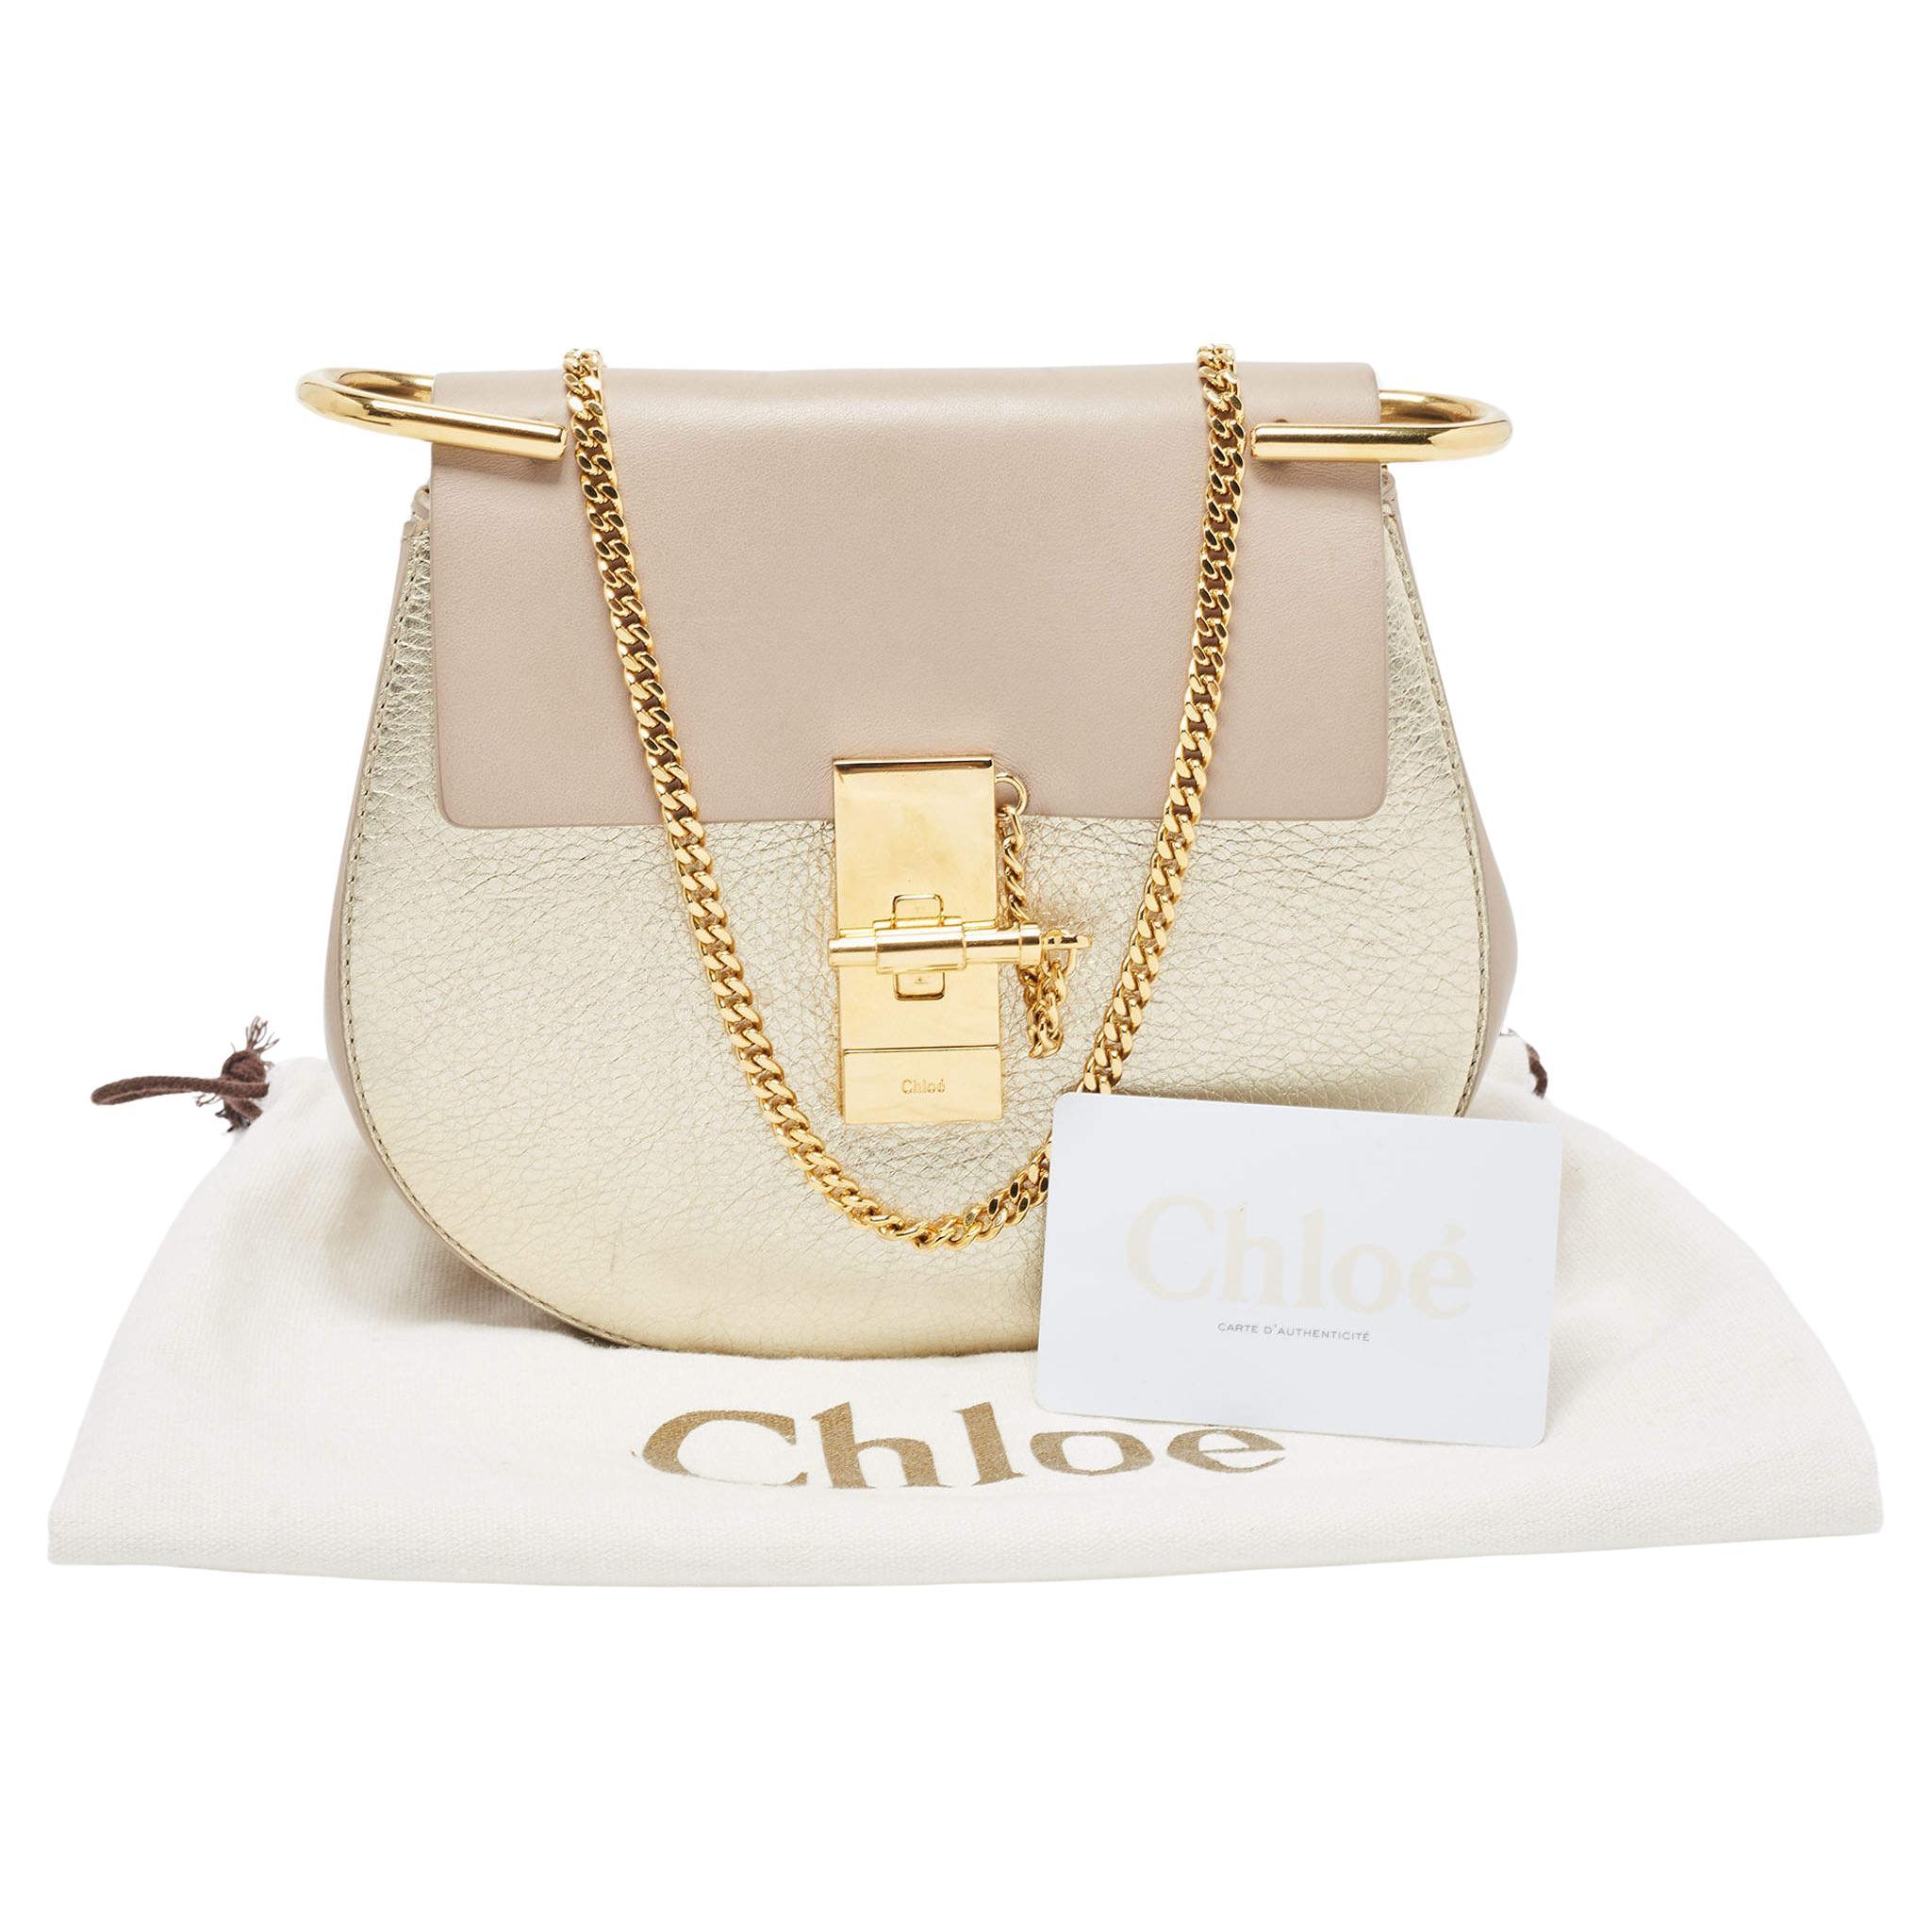 Chloe Gold/Beige Leather Small Drew Shoulder Bag